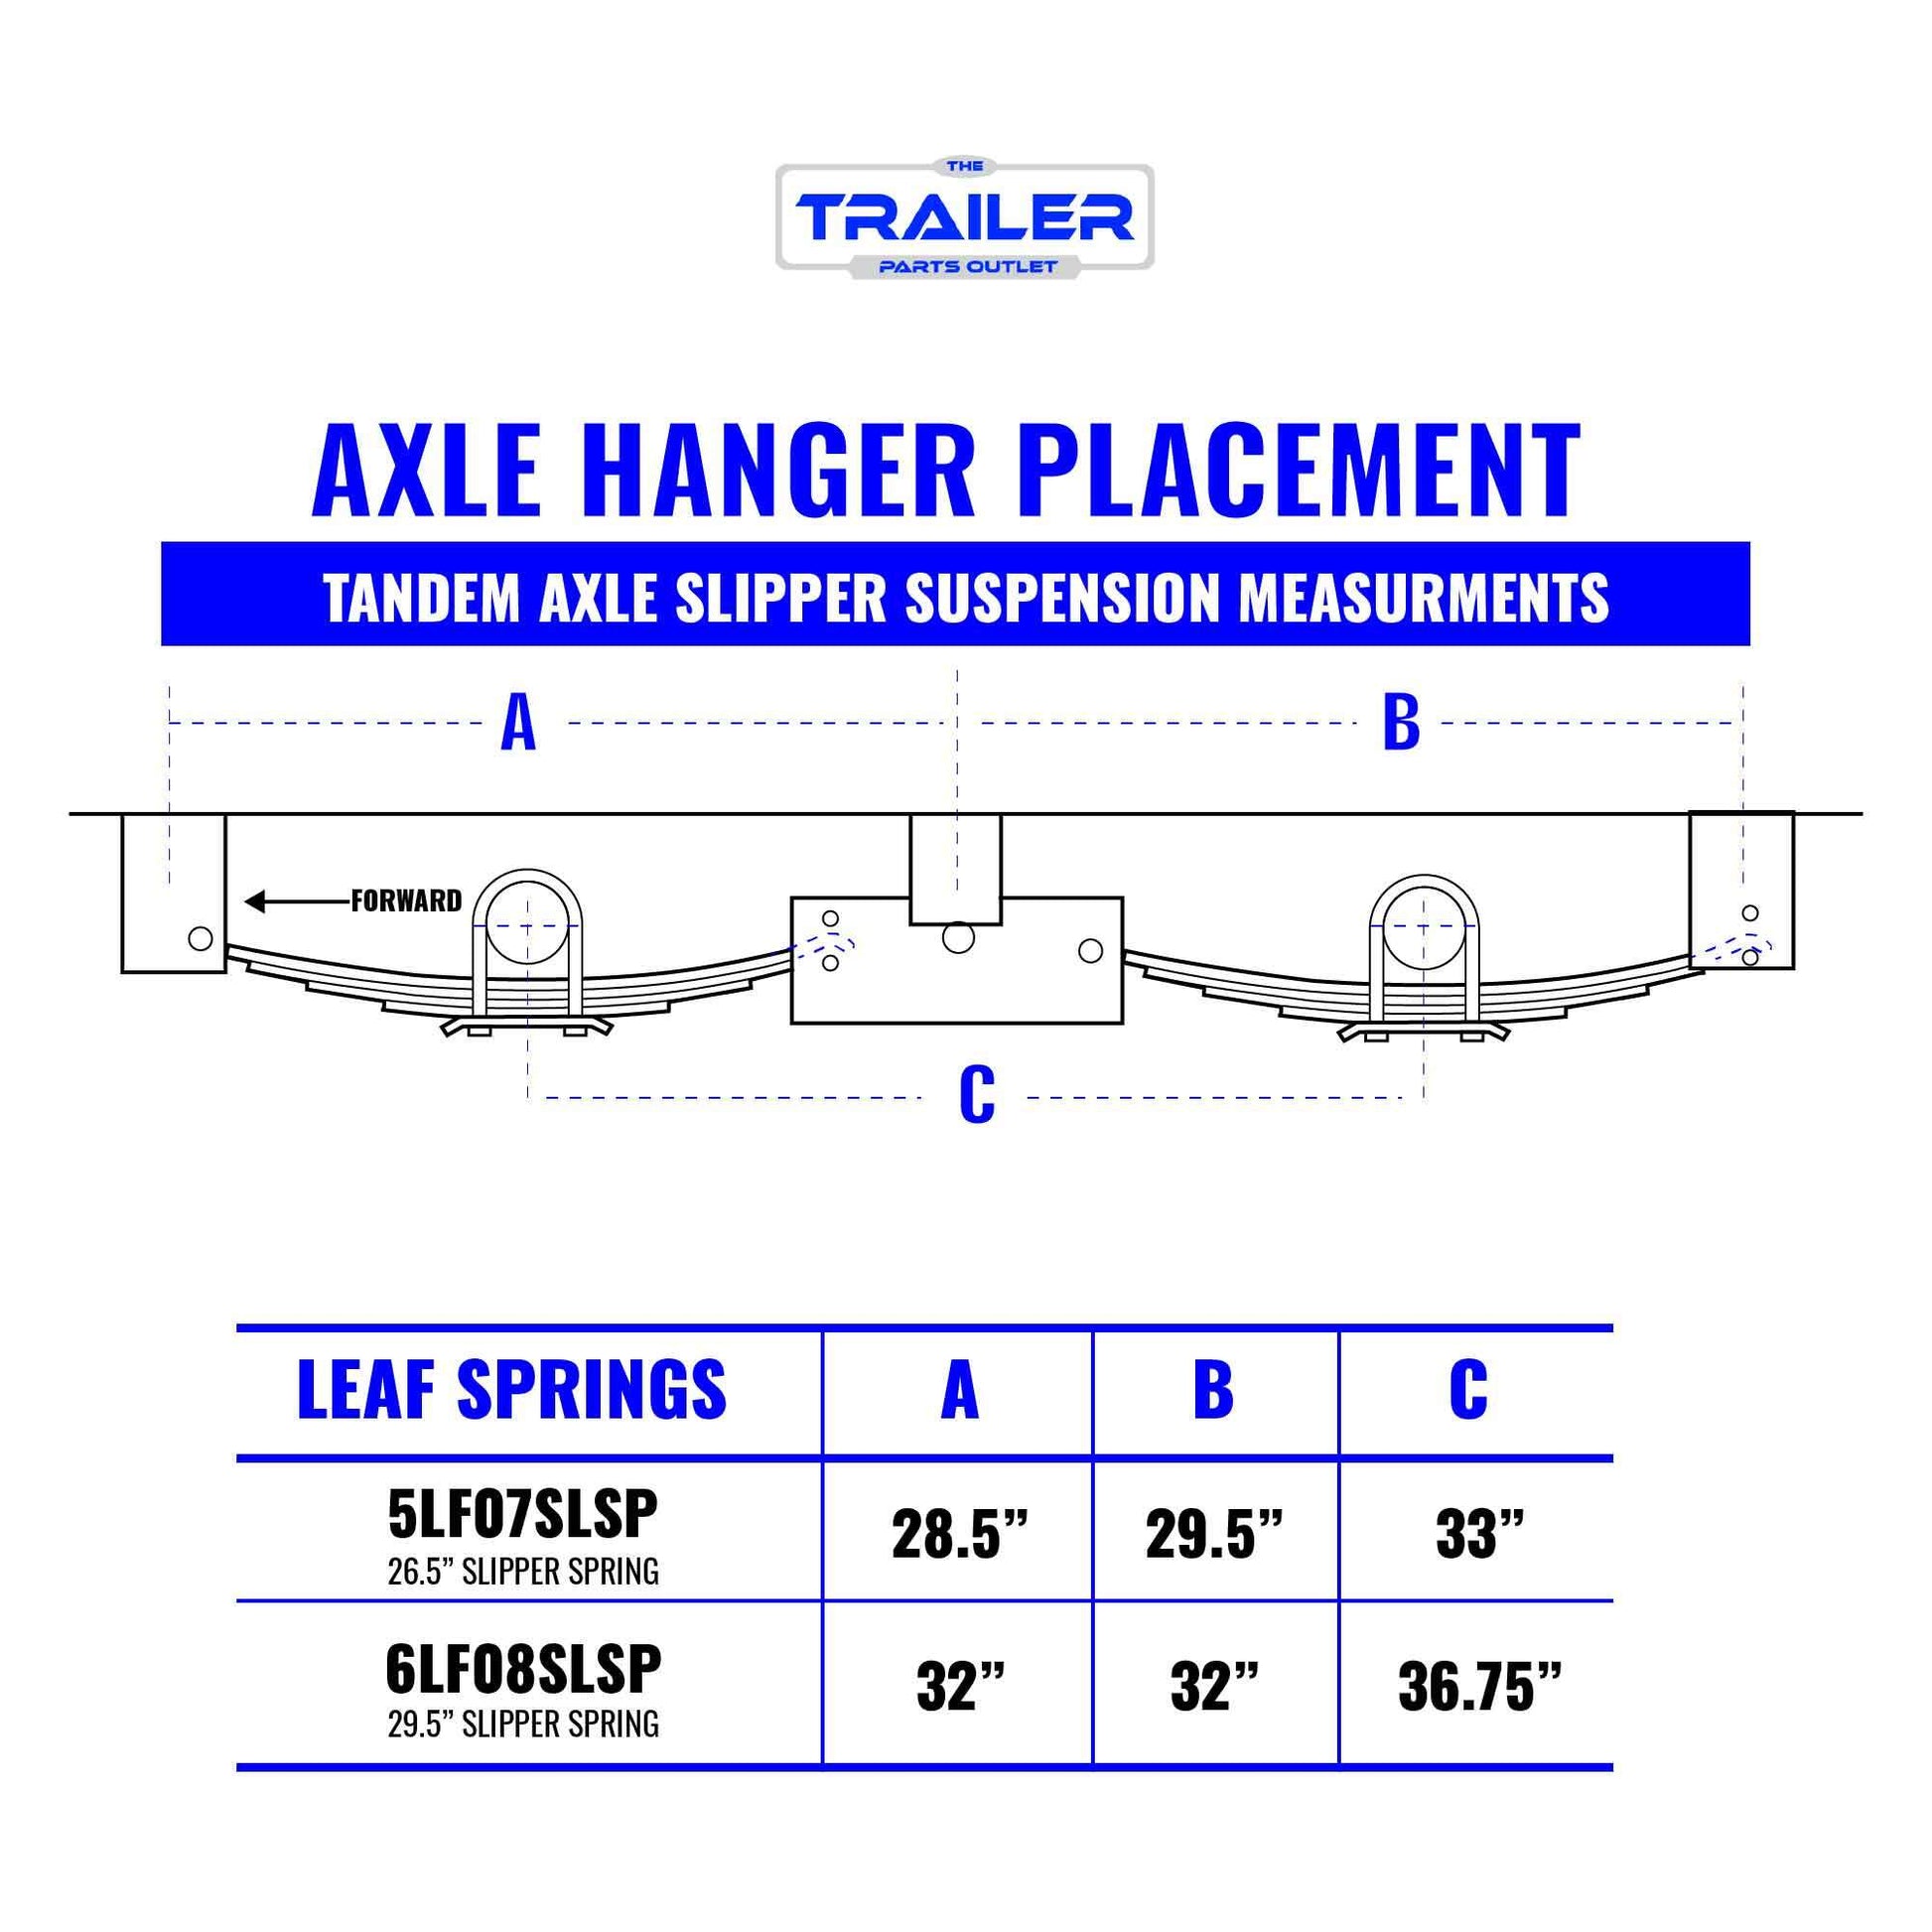 8000 lb Tandem Axle TK Trailer kit - 16K Capacity (Original Series) 9/16" Studs - The Trailer Parts Outlet